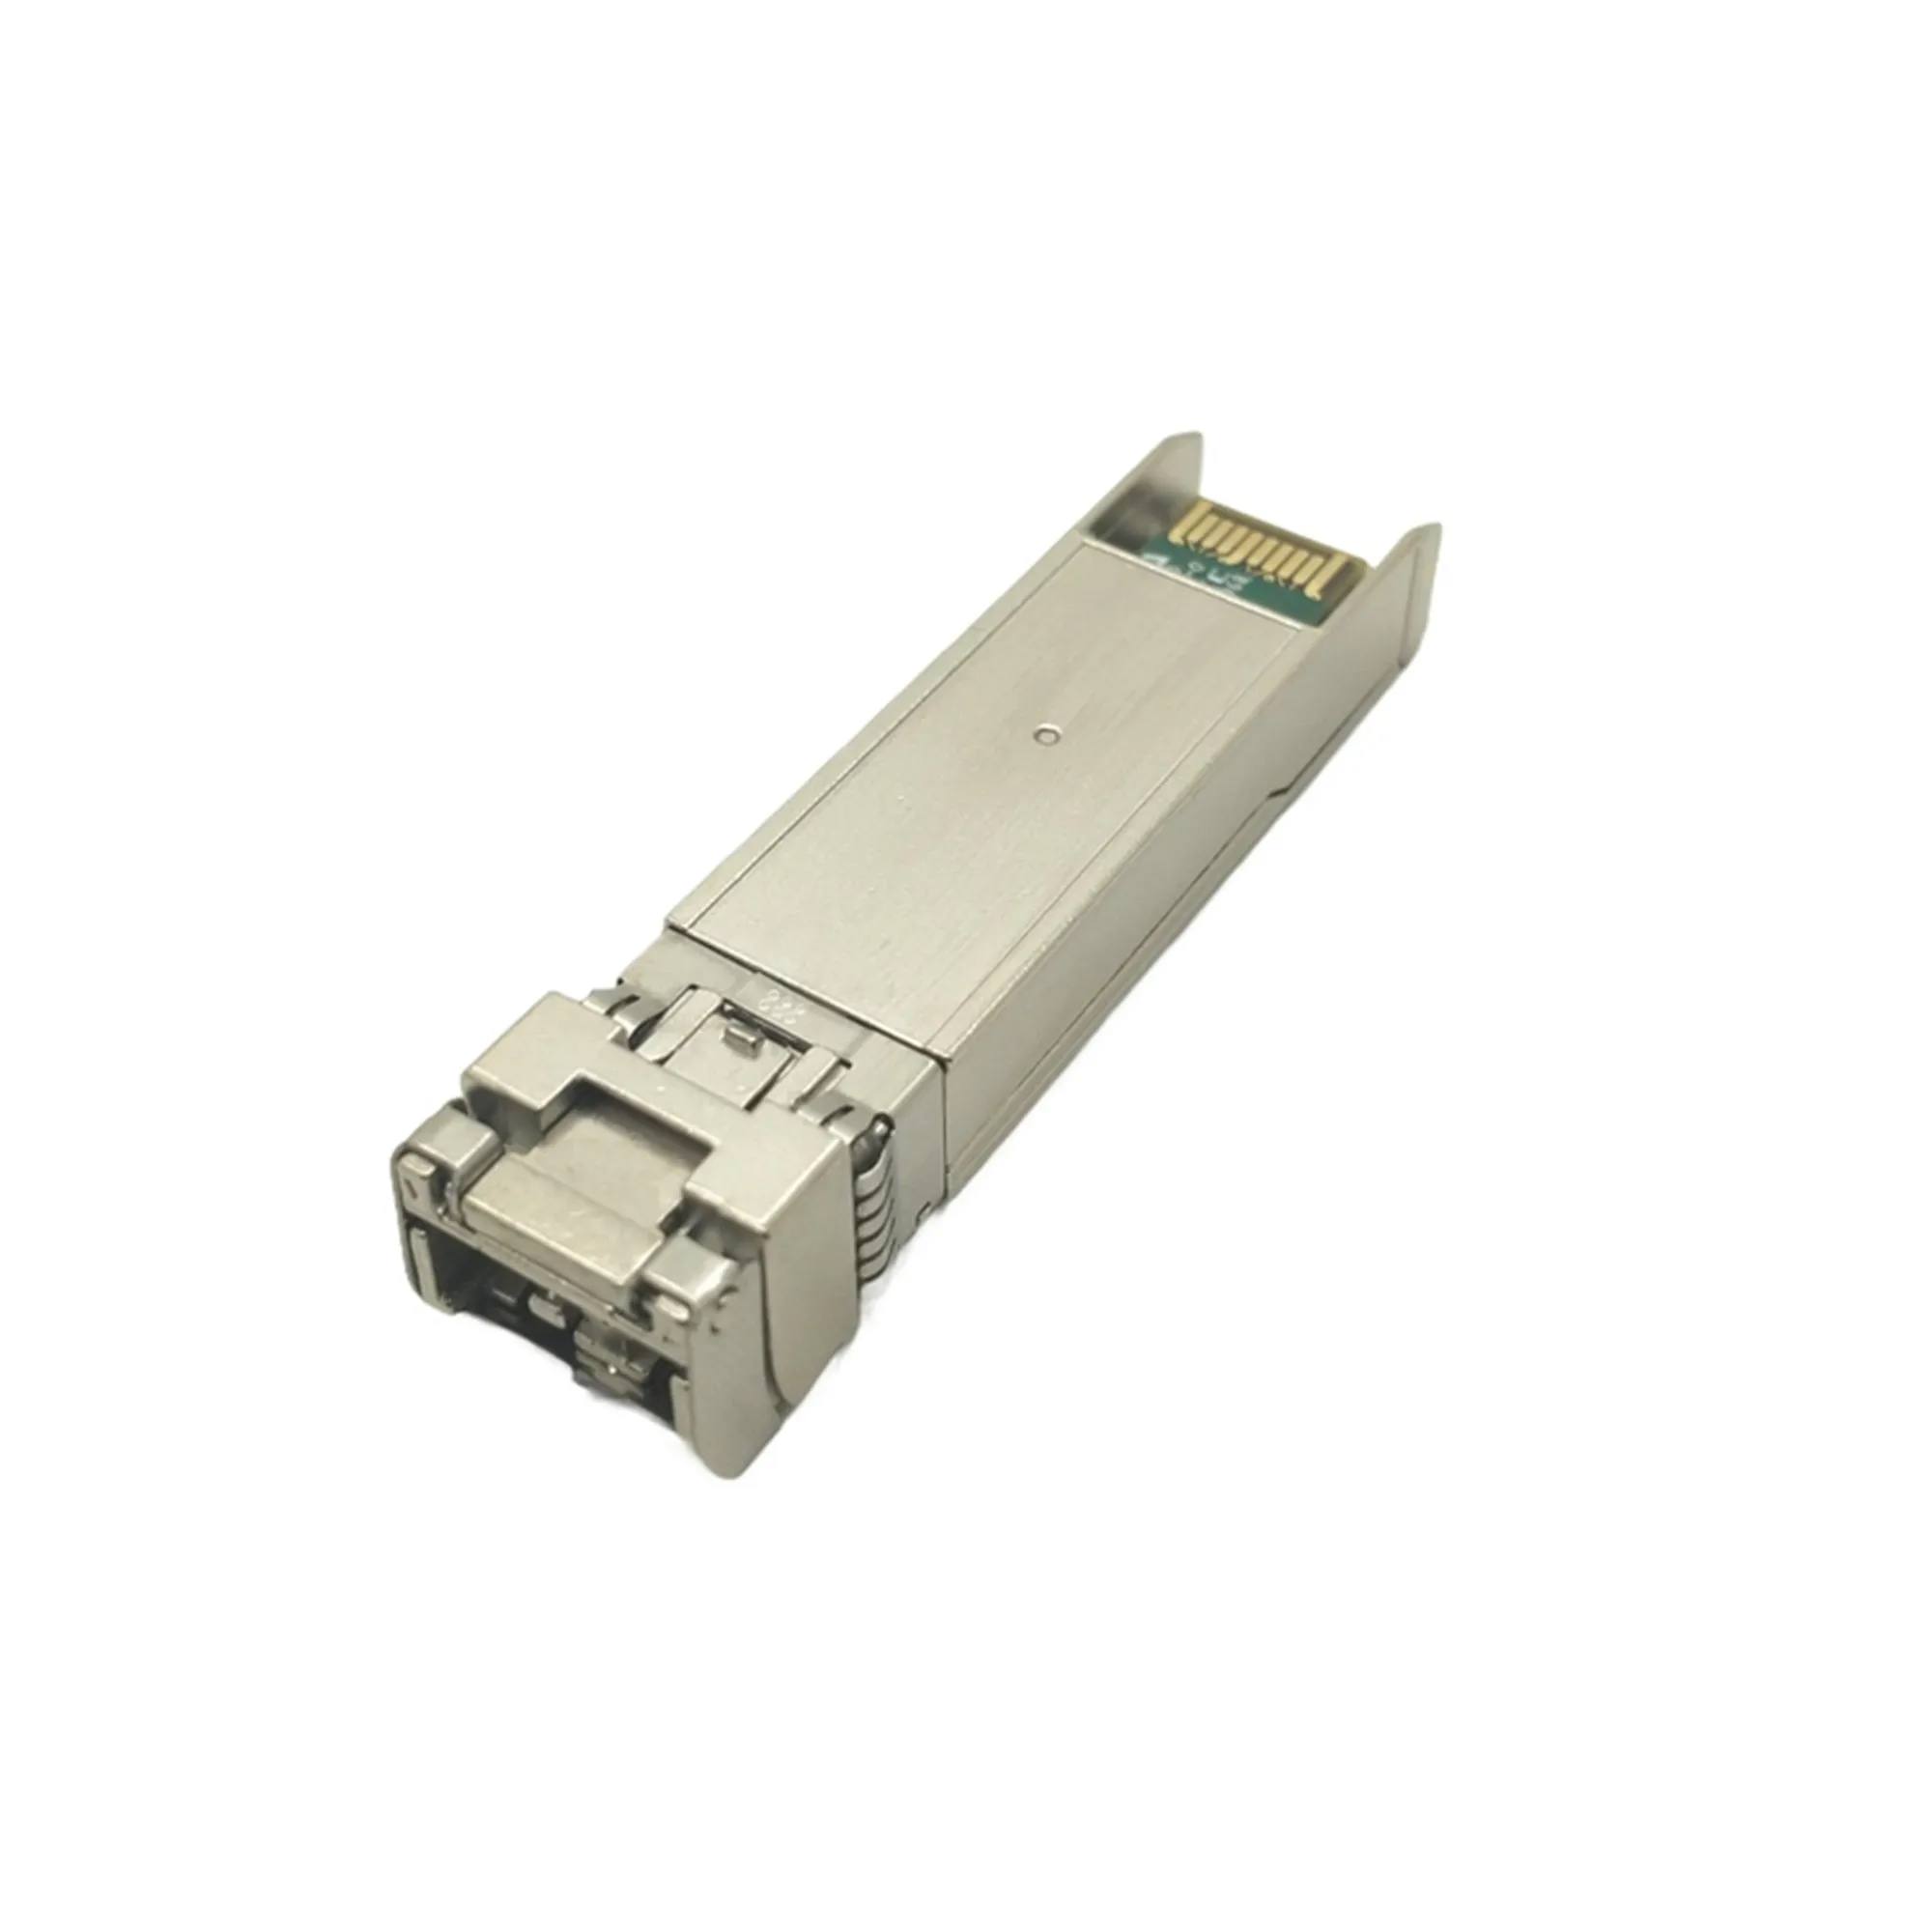 qlogic FTLF8529P4BCV-QL 16GB SFP 850nm SFP+ Transceiver module qlogic 16g Transceiver/16g switch/qlogic sfp/qle hba enlarge